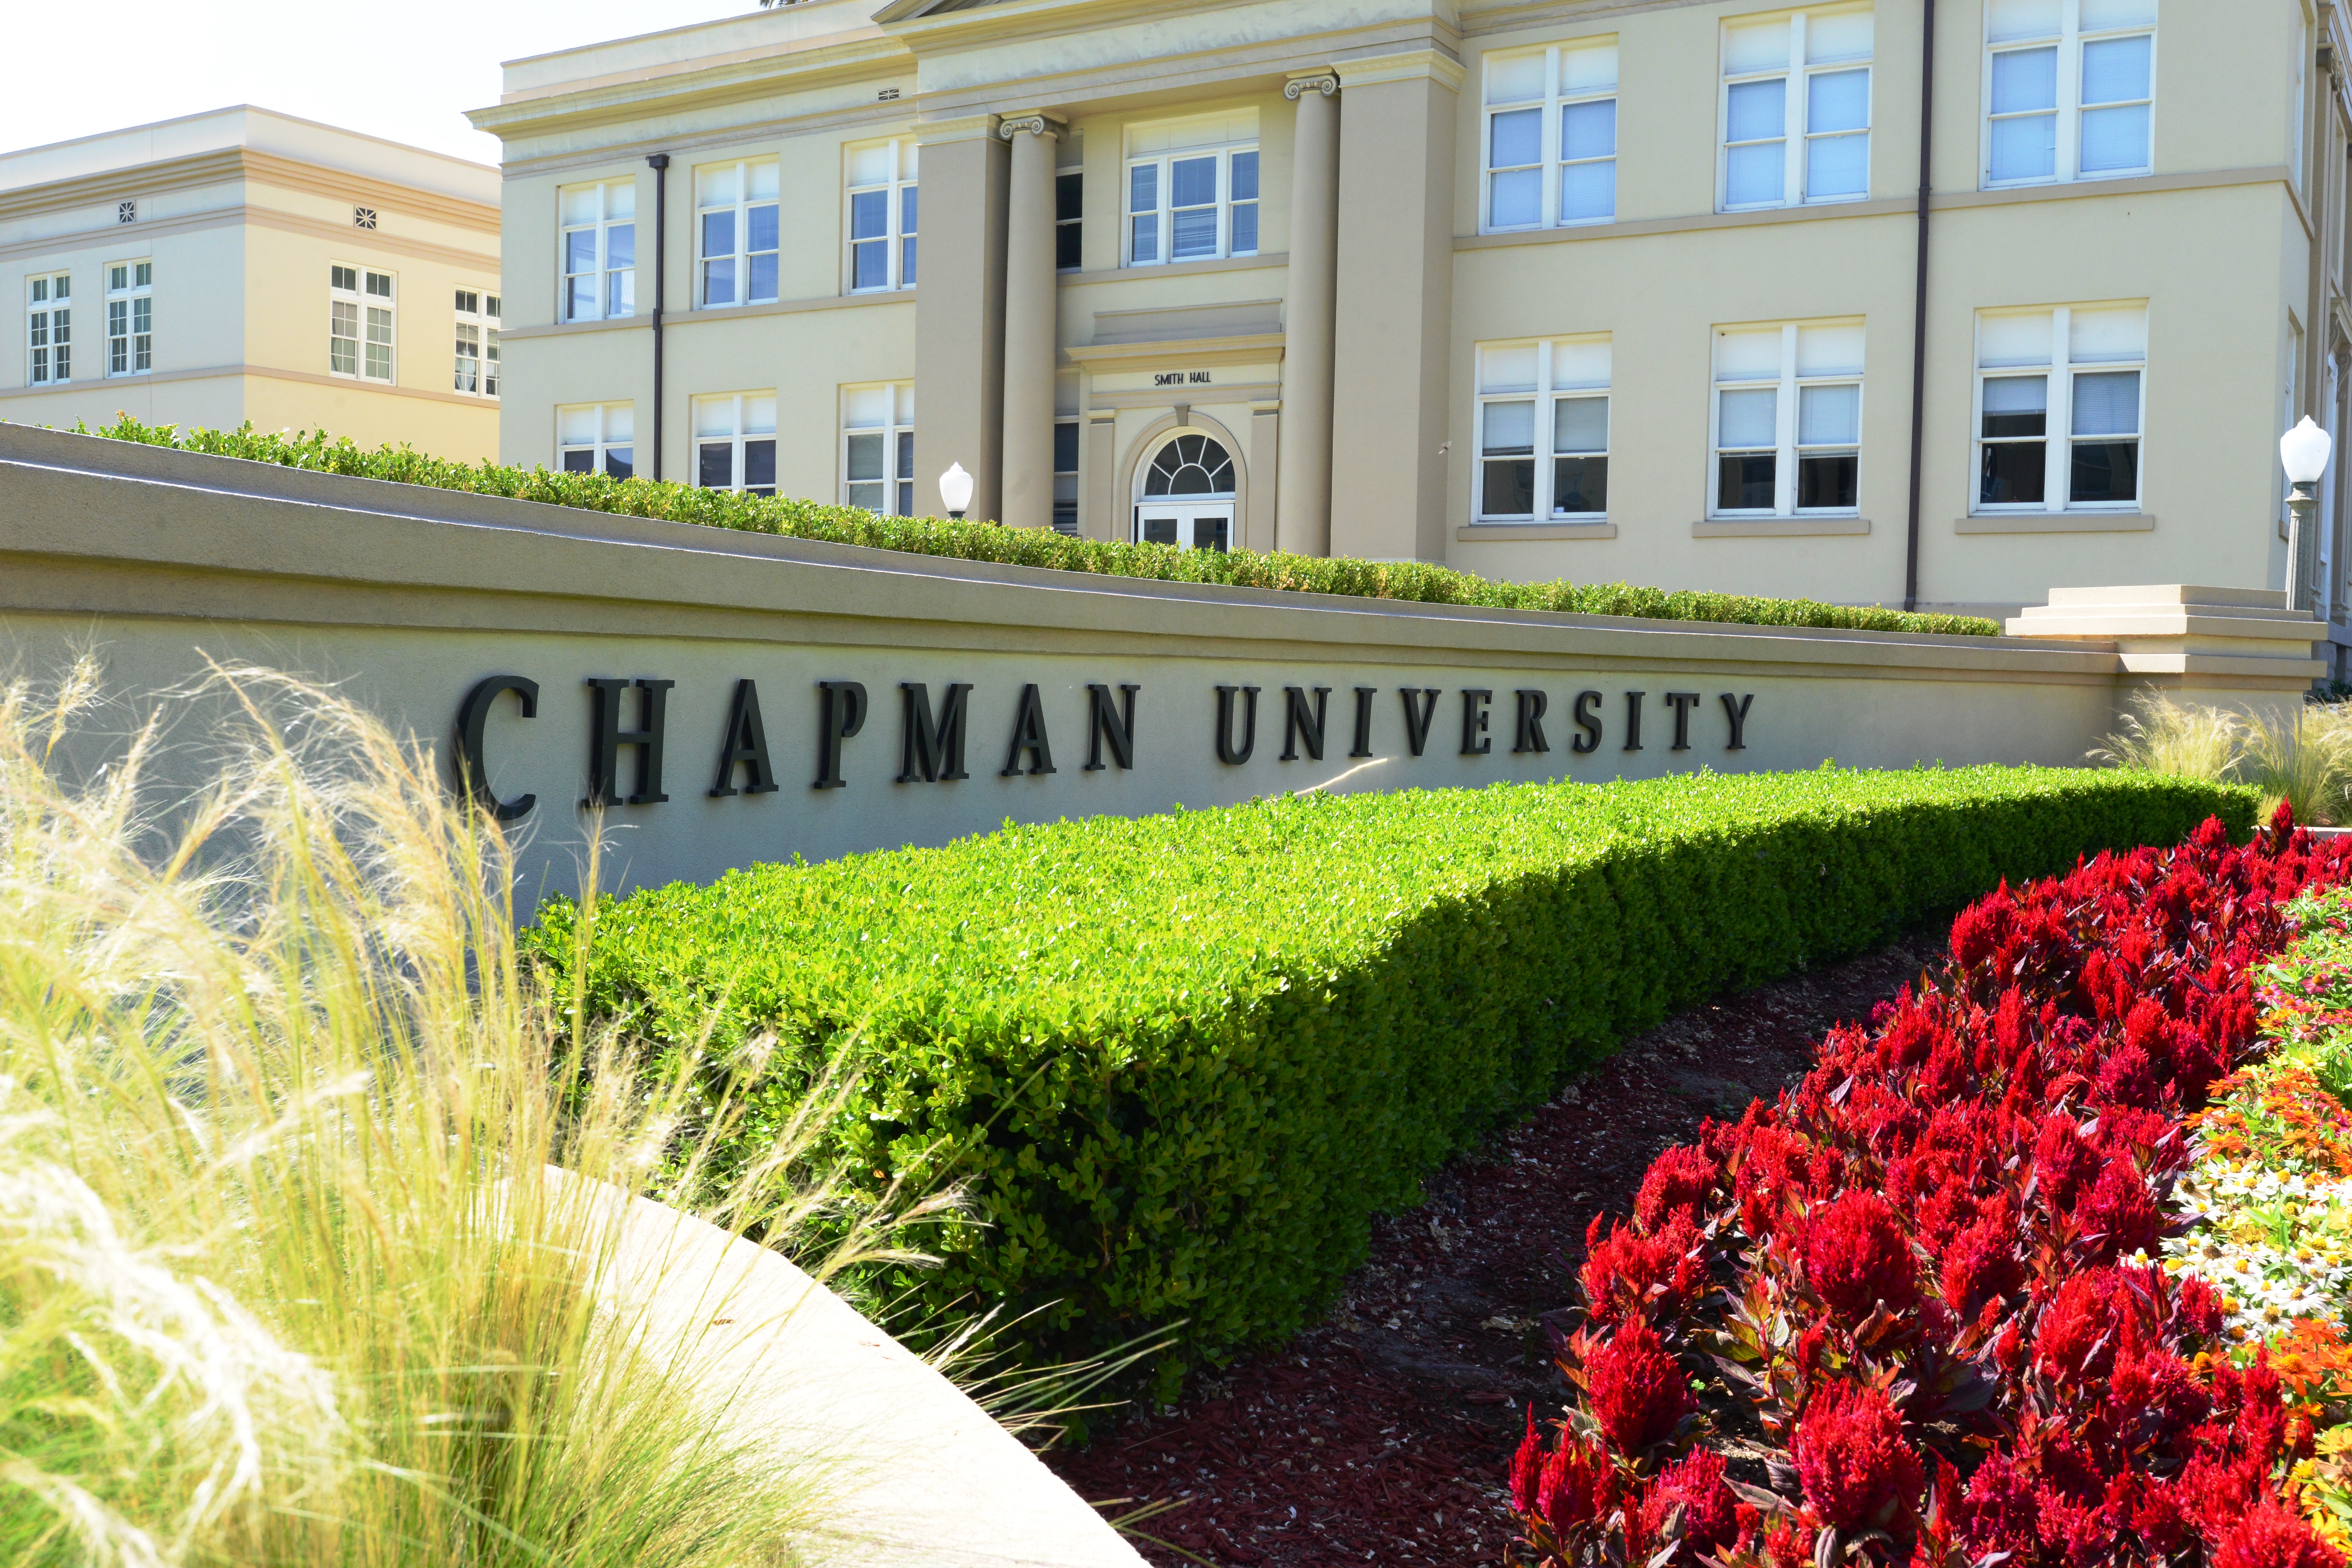 Chapman University sign